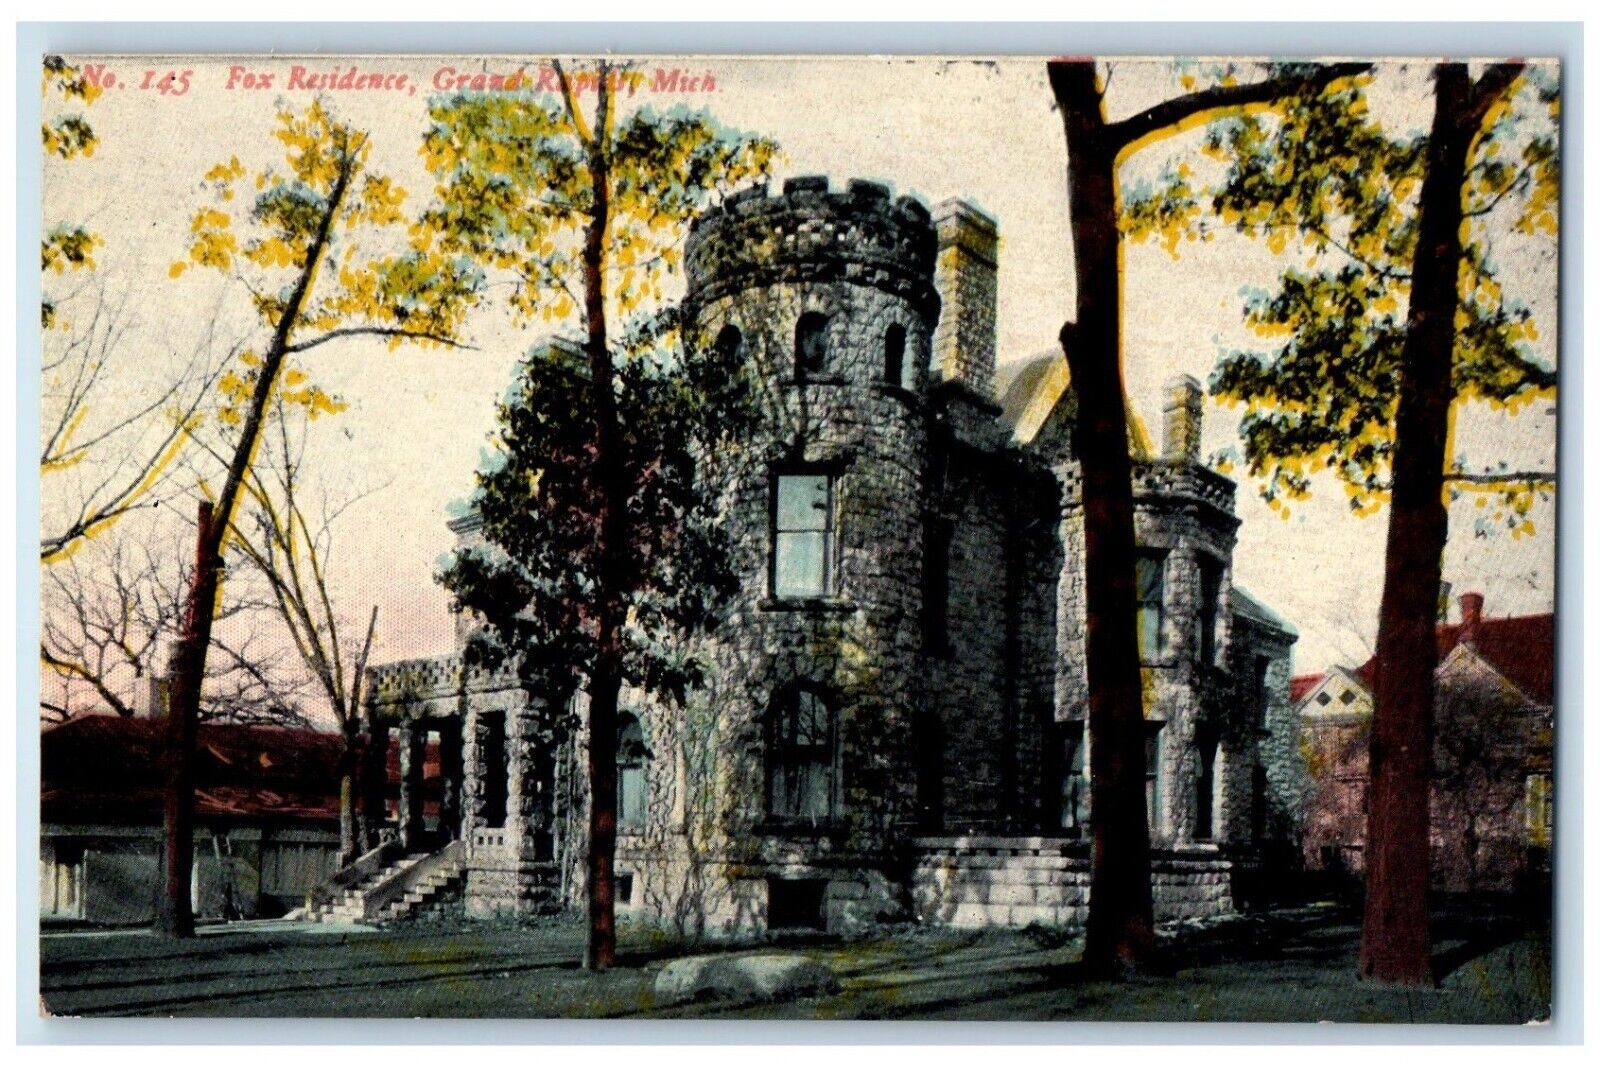 c1910 View of Fox Residence Grand Rapids Michigan MI Antique Postcard